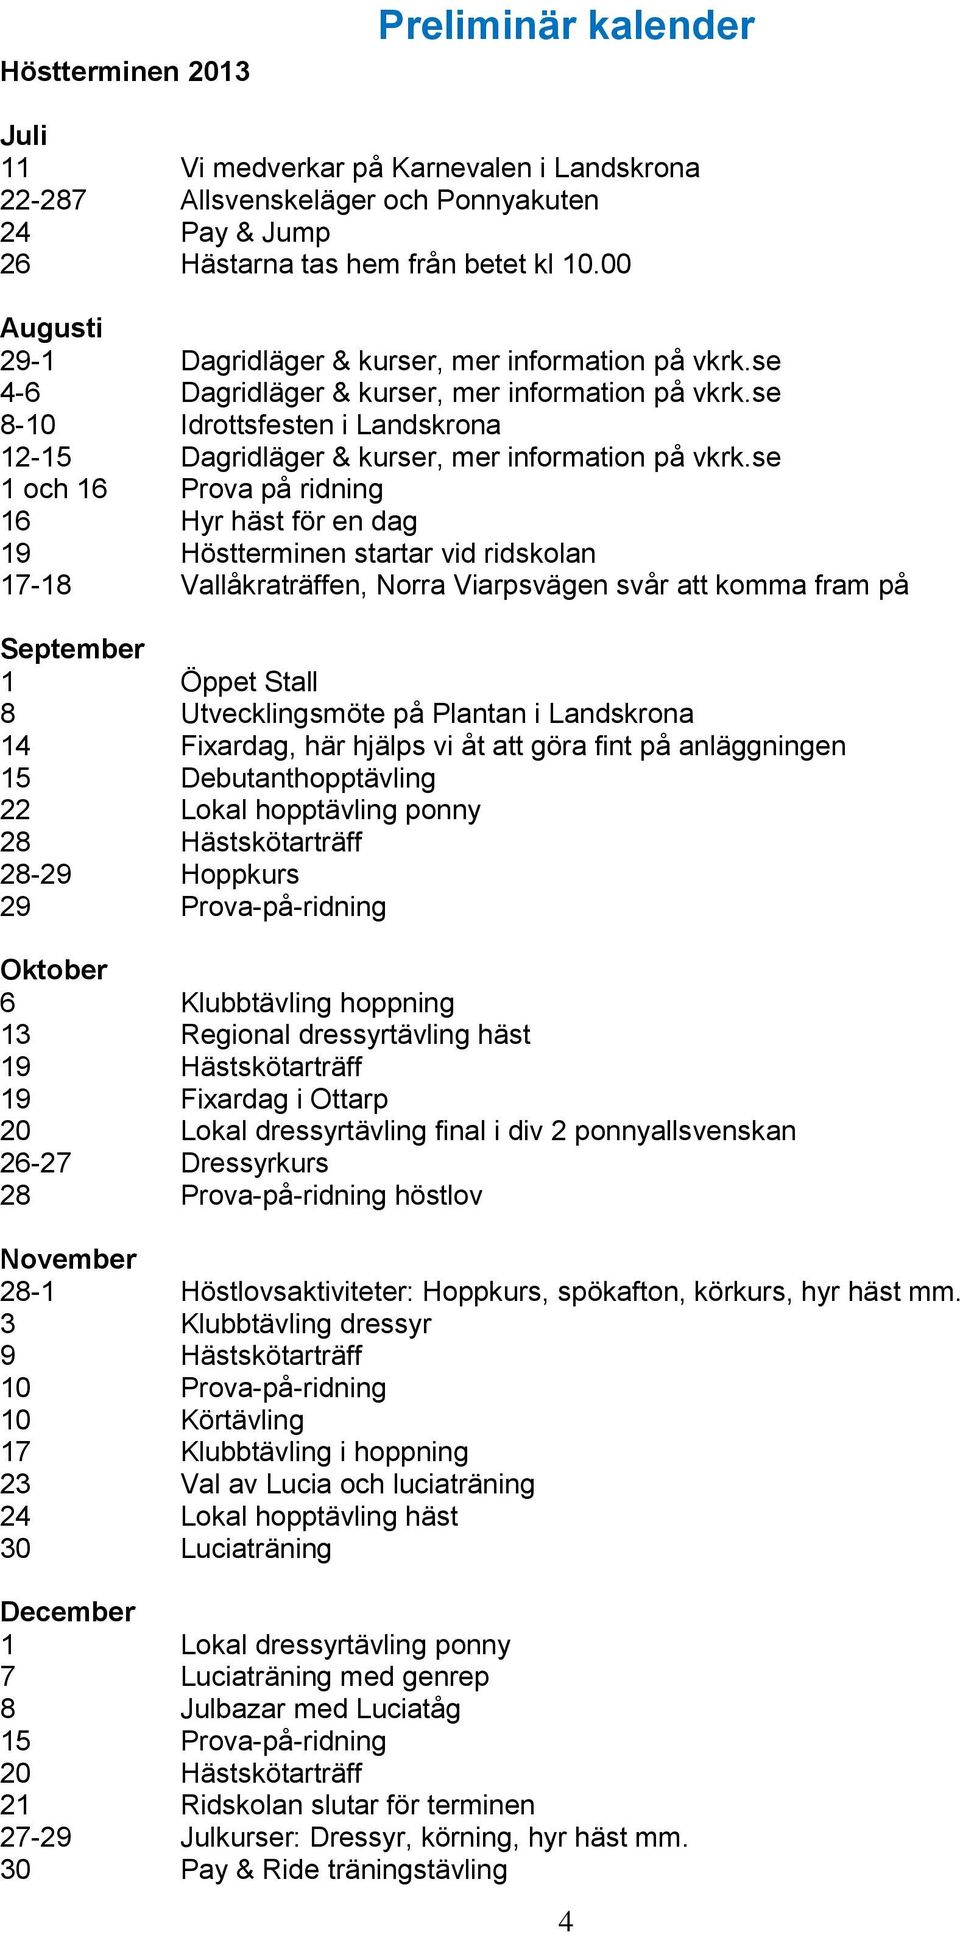 se 8-10 Idrottsfesten i Landskrona 12-15 Dagridläger & kurser, mer information på vkrk.